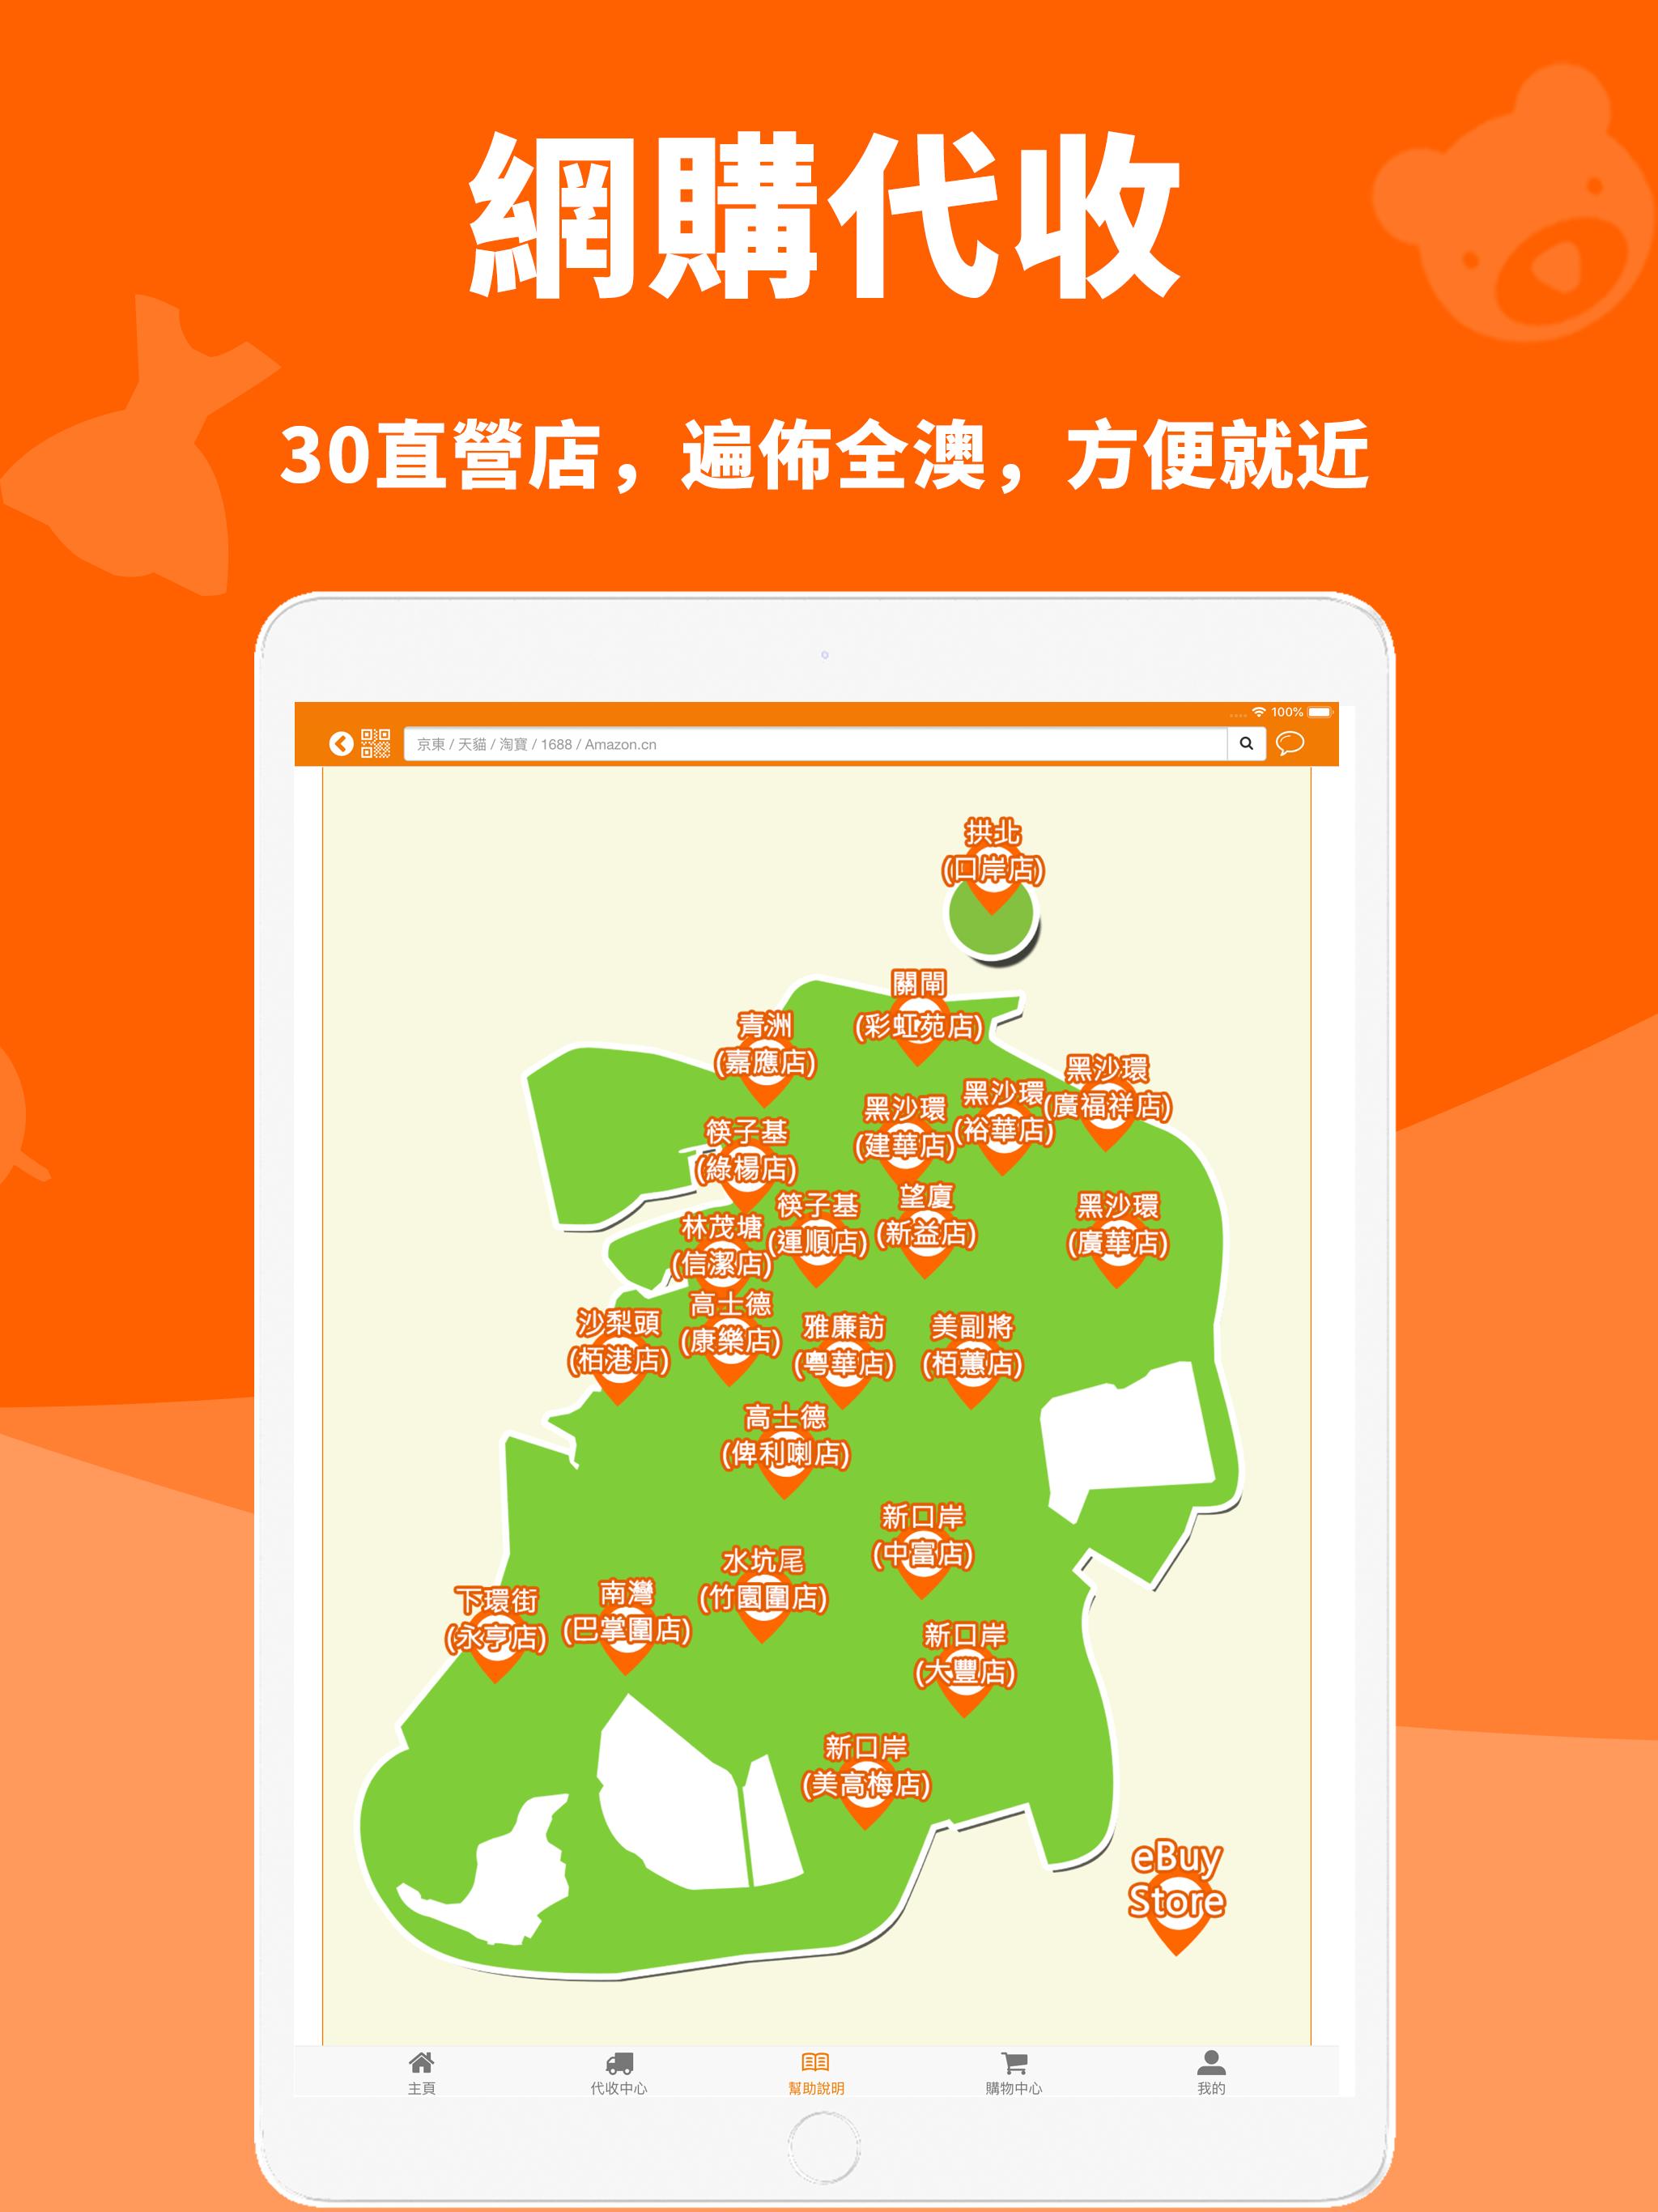 eBuy.mo 澳門易購網 2.1.4 Screenshot 16